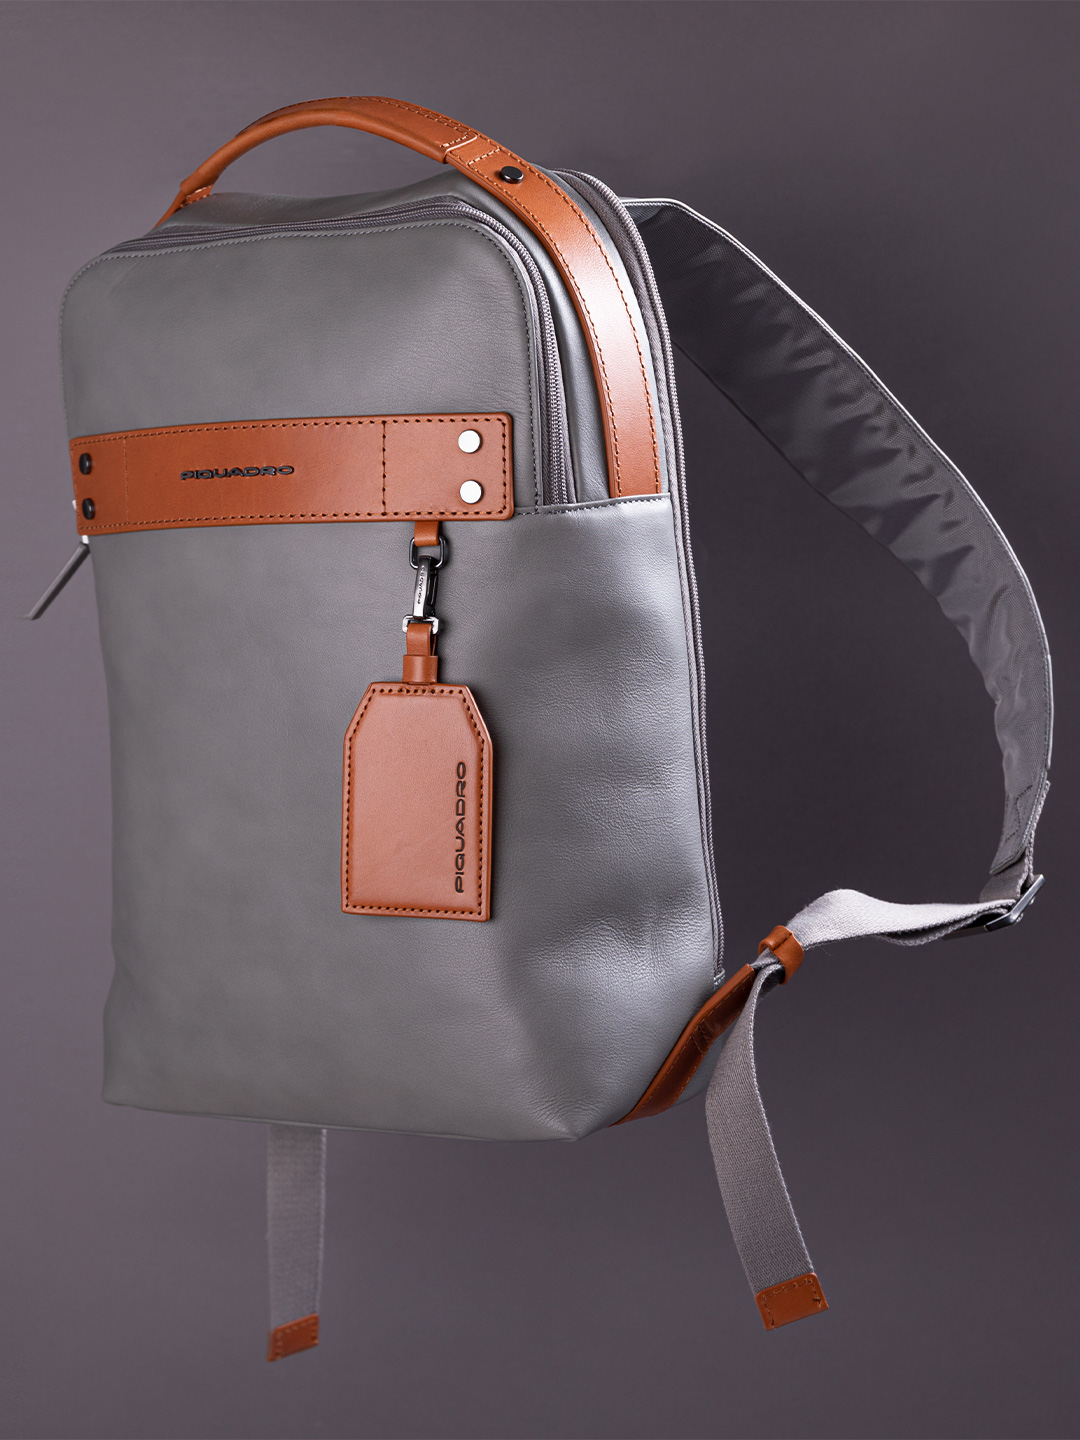 Grey Piquadro backpack